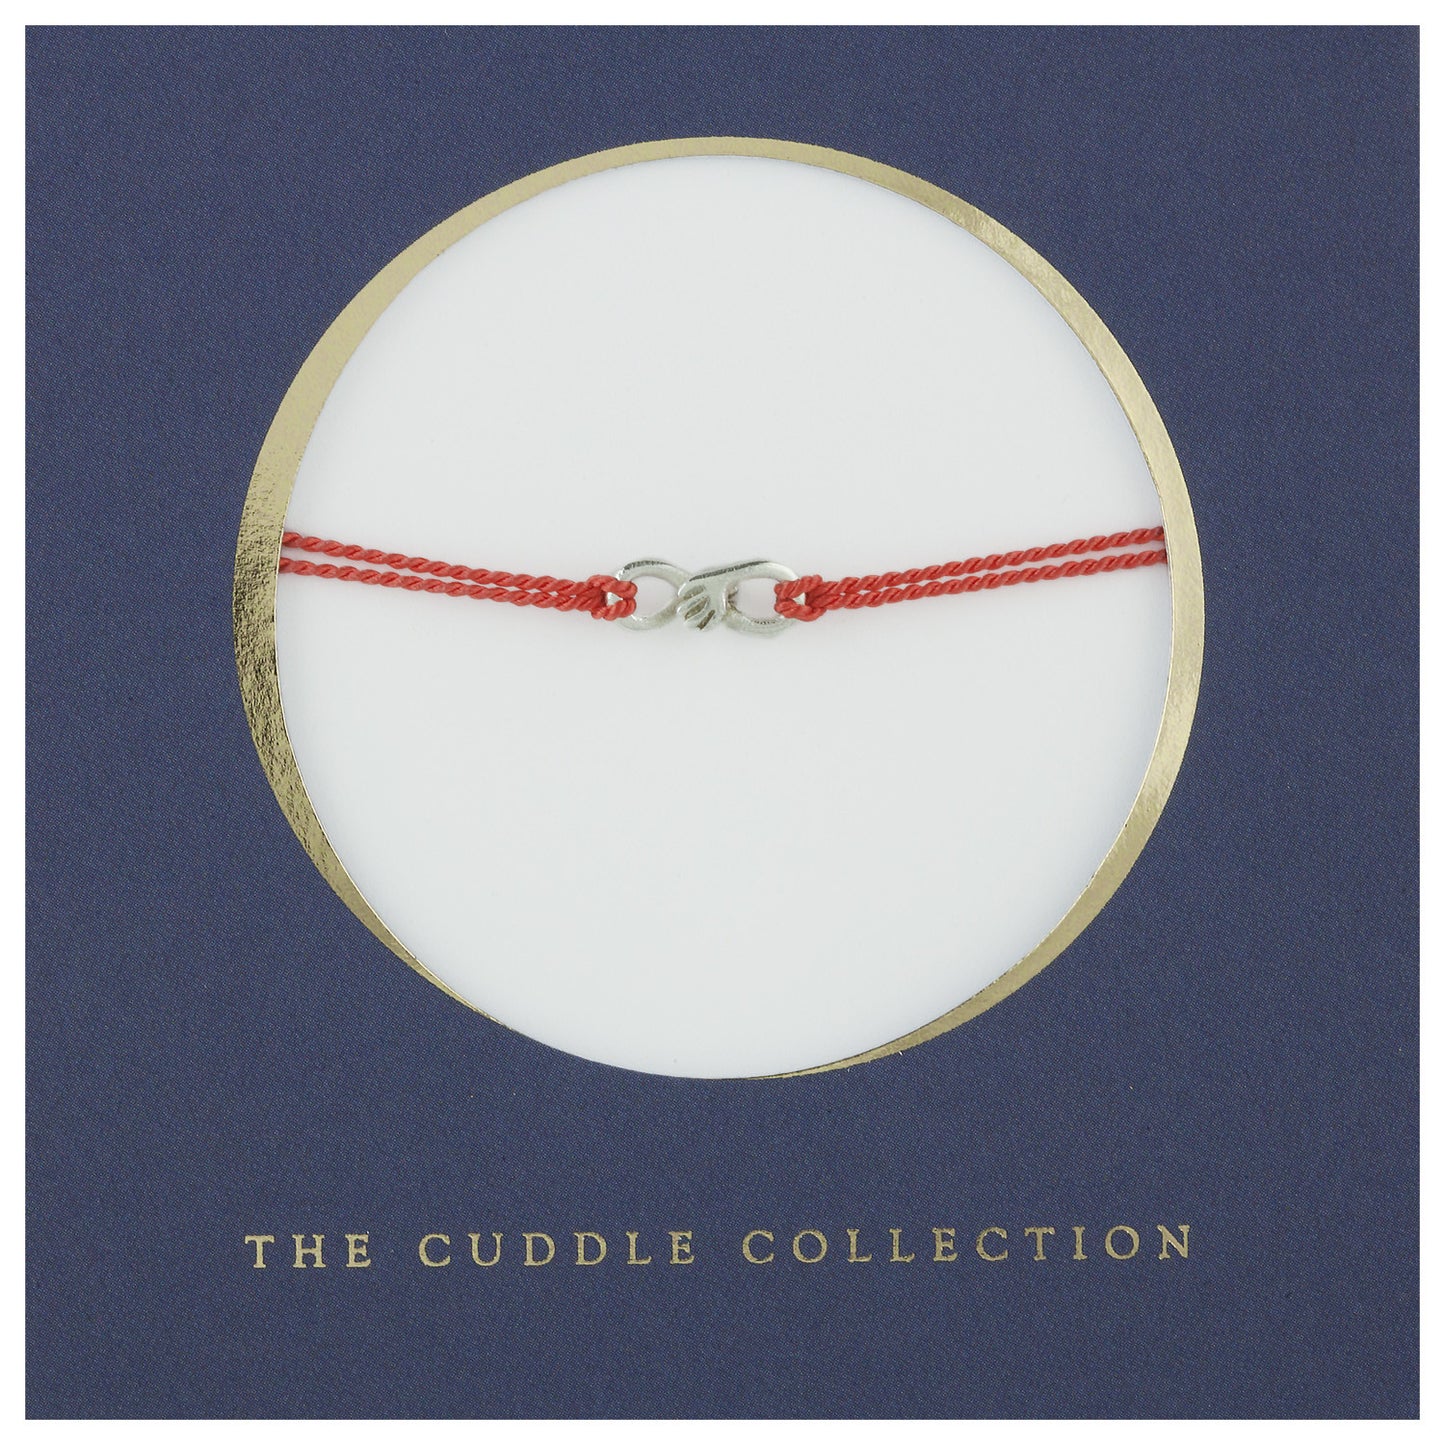 Cuddle charm bracelet on Orange silk thread